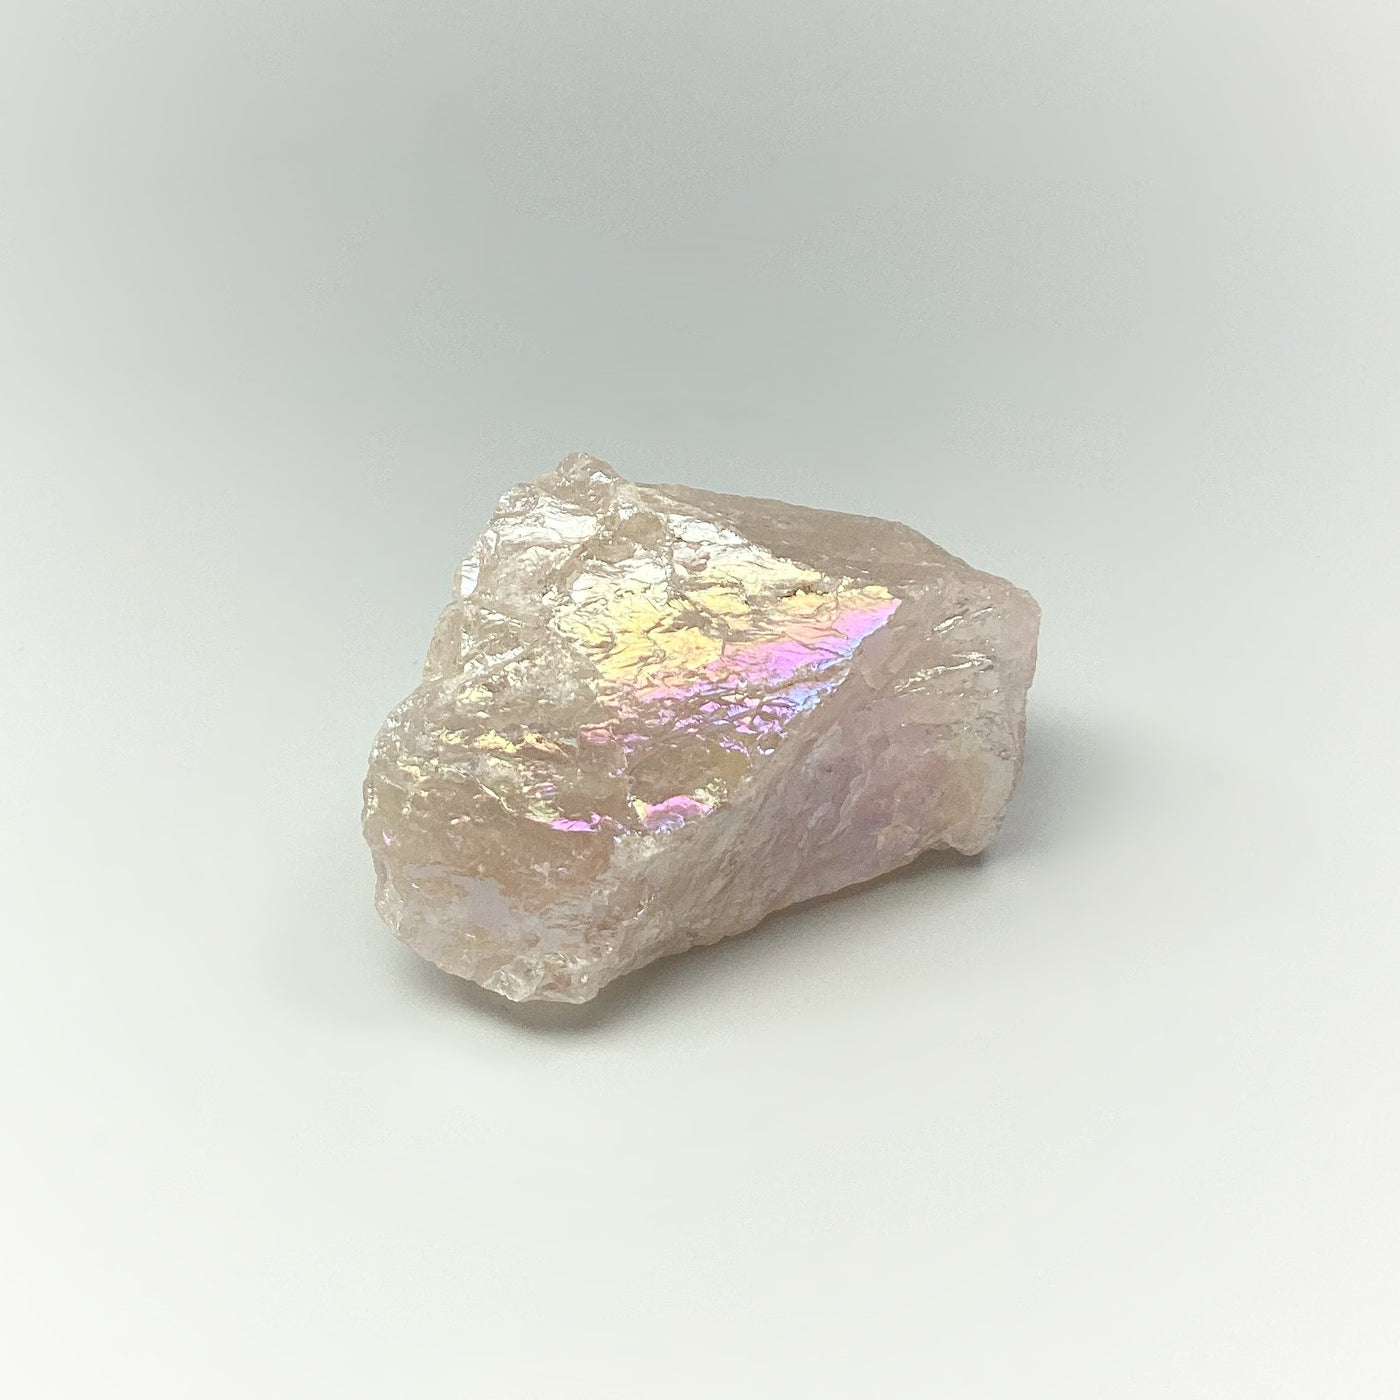 Opalescent Rose Quartz Rough Chunk at $35 Each